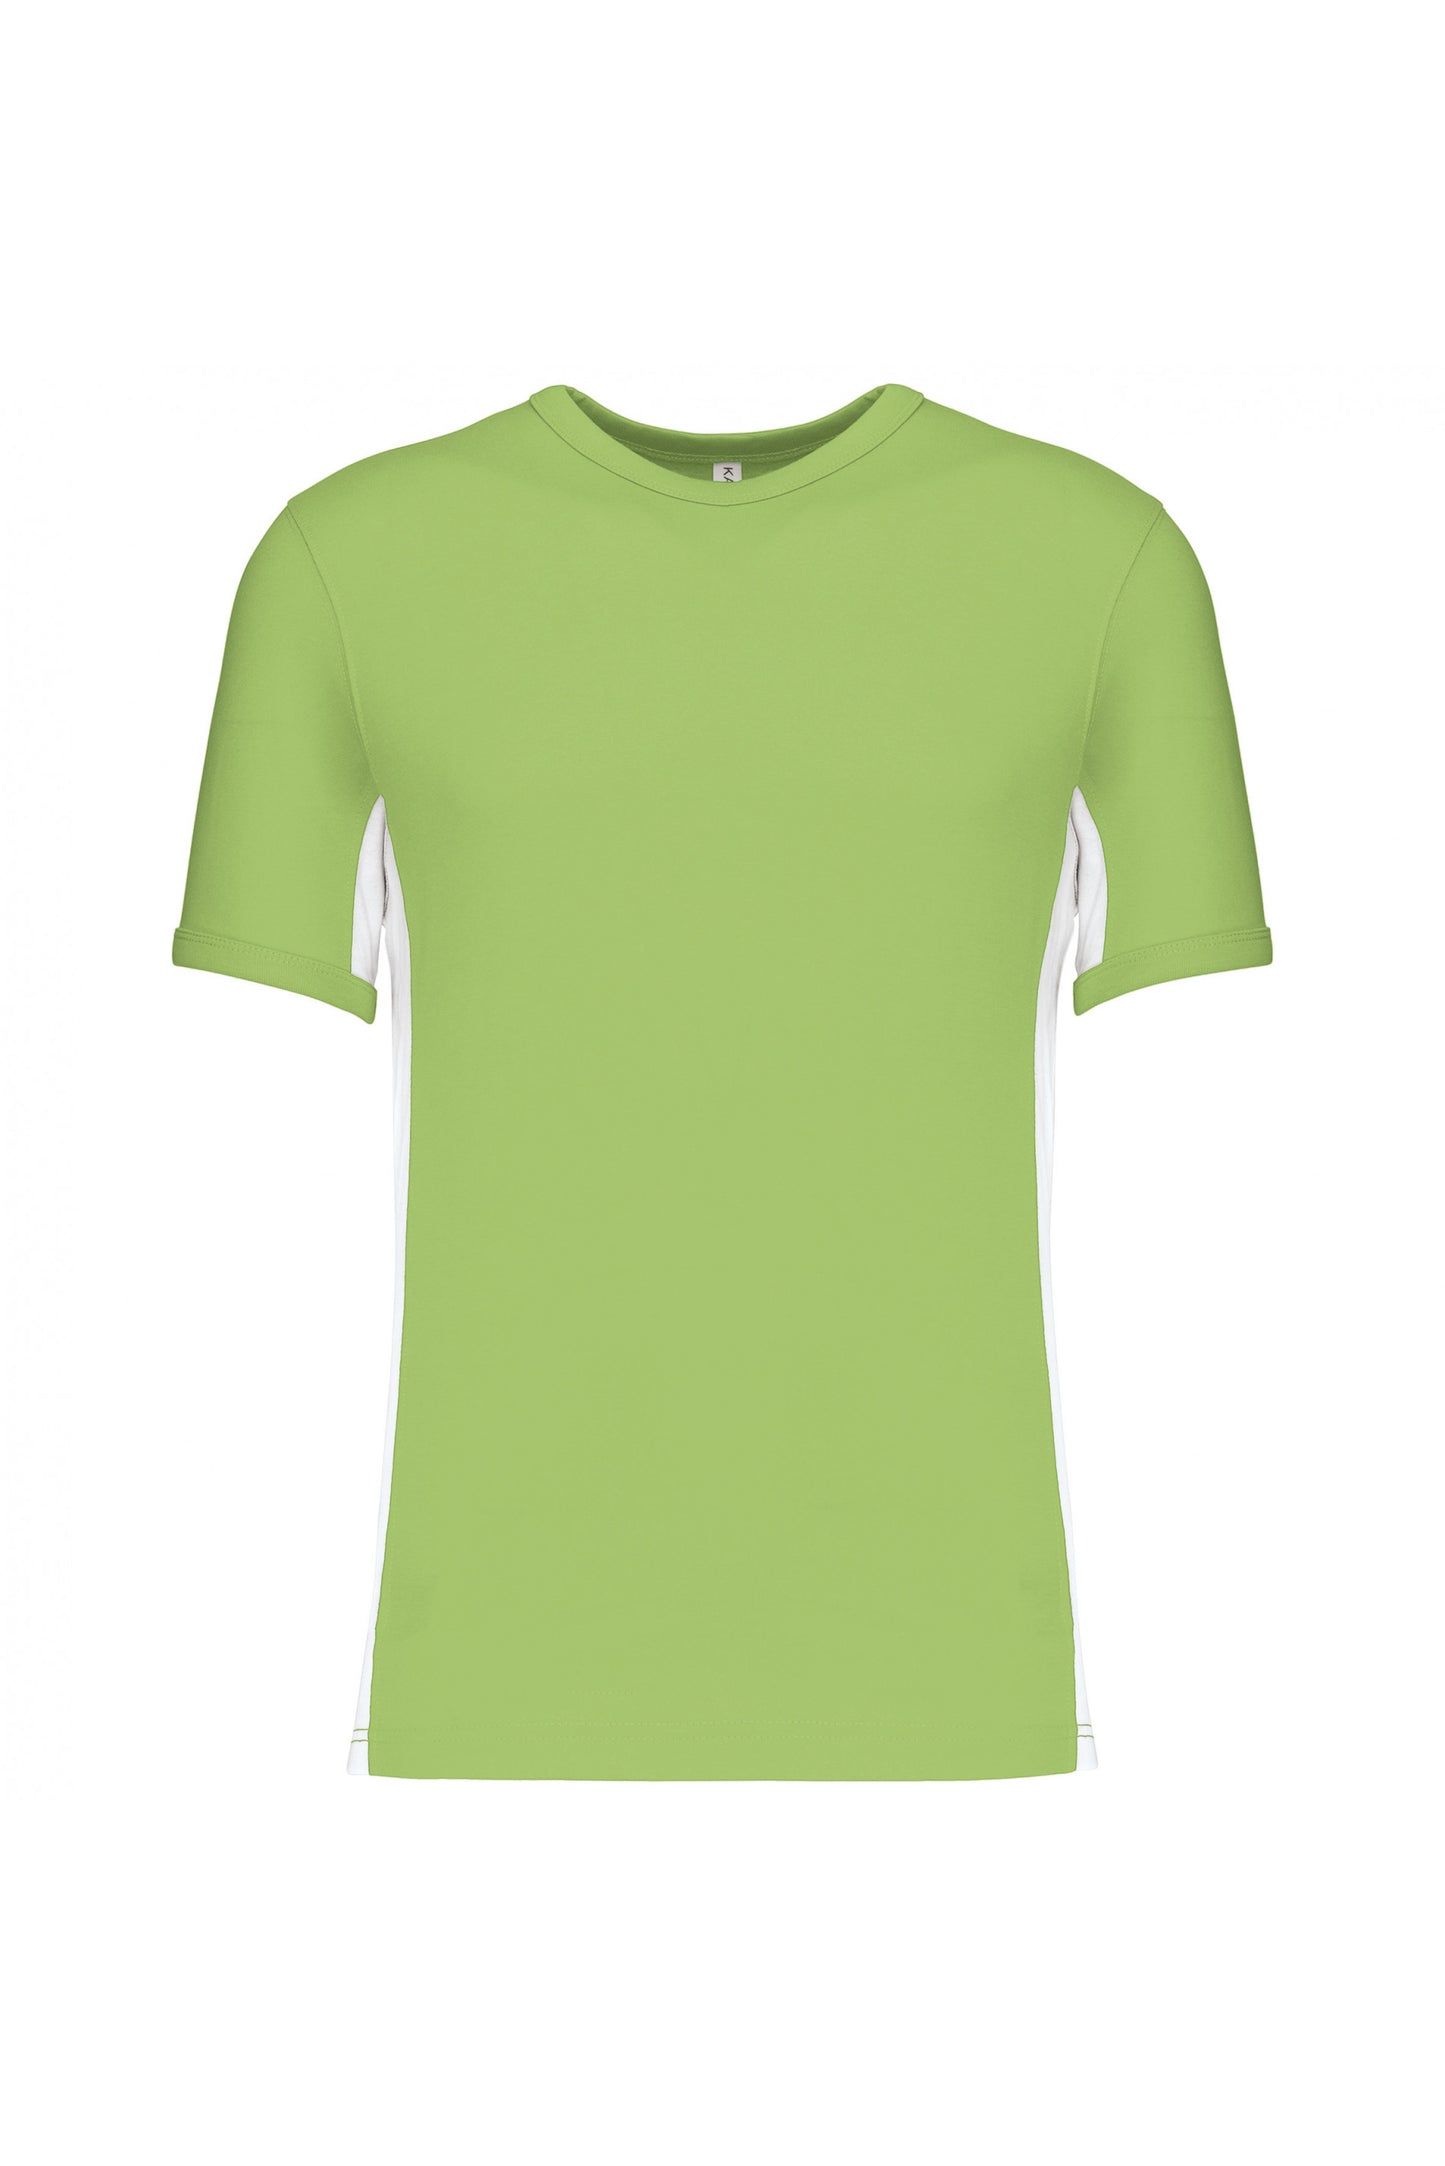 SNC340 -Tiger -T-shirt manica corta bicolore.Unisex